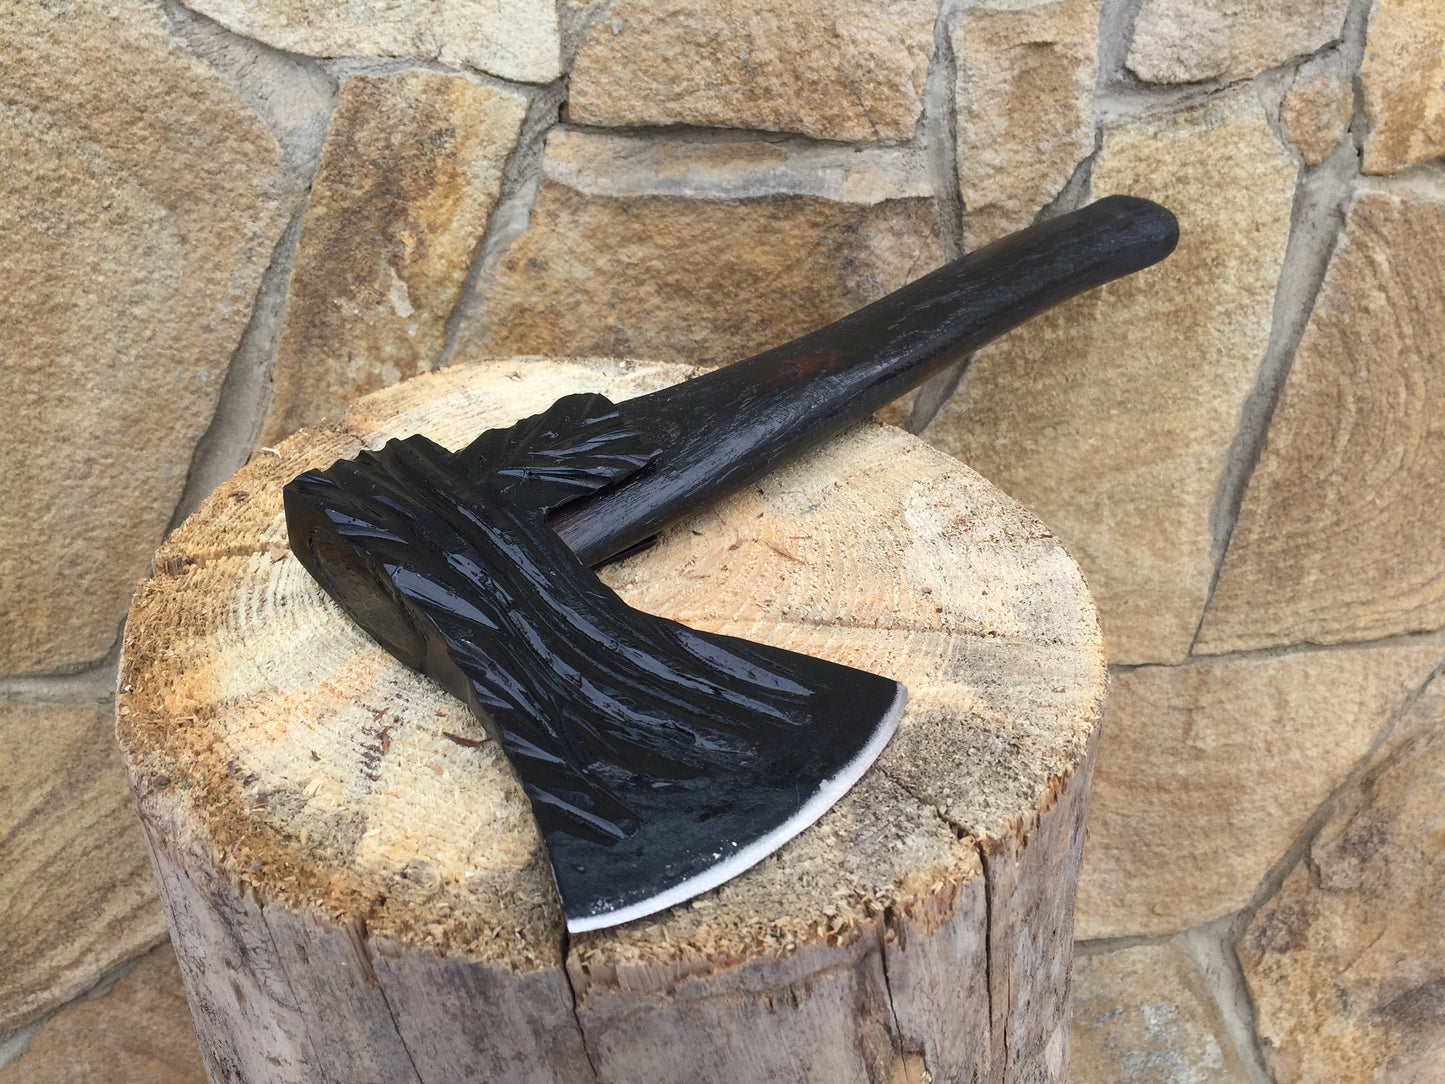 Woodwork axe, viking axe, custom axe, viking hatchet, felling forged axe, axe gift man, mens gift, hunting axe tool,steel axe,survival tools